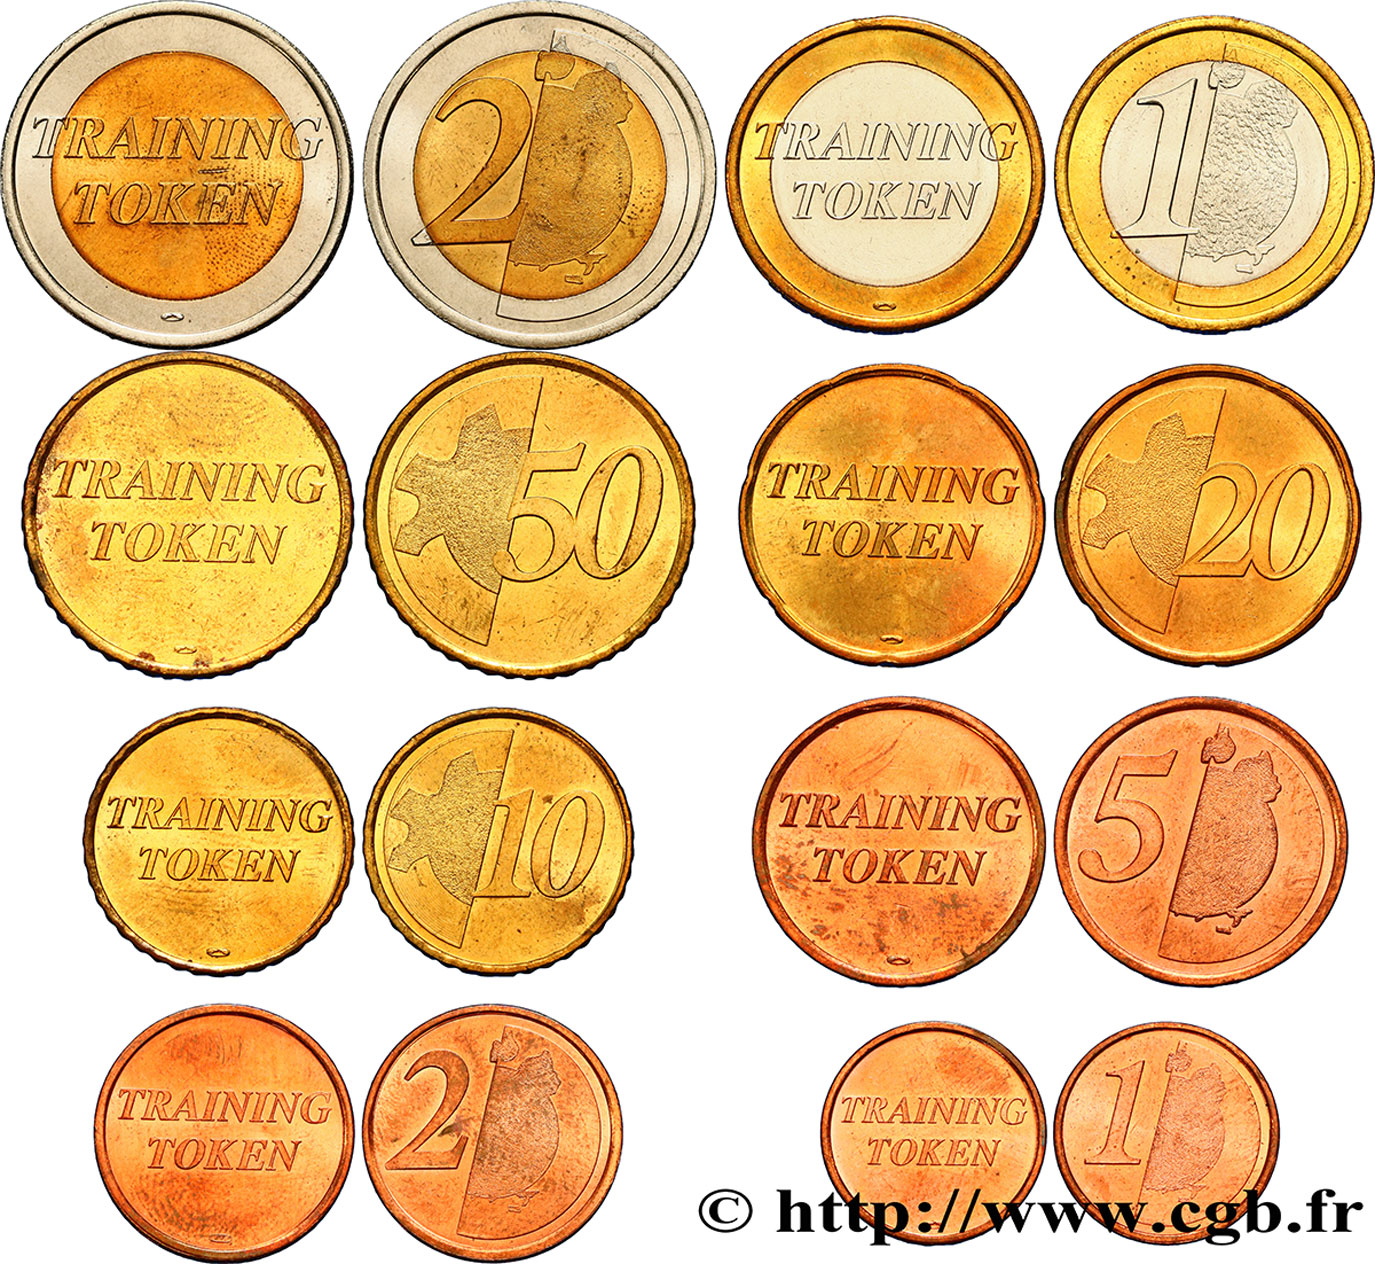 EUROPÄISCHE ZENTRALBANK Série complète Training tokens - 1 cent à 2 Euro n.d.